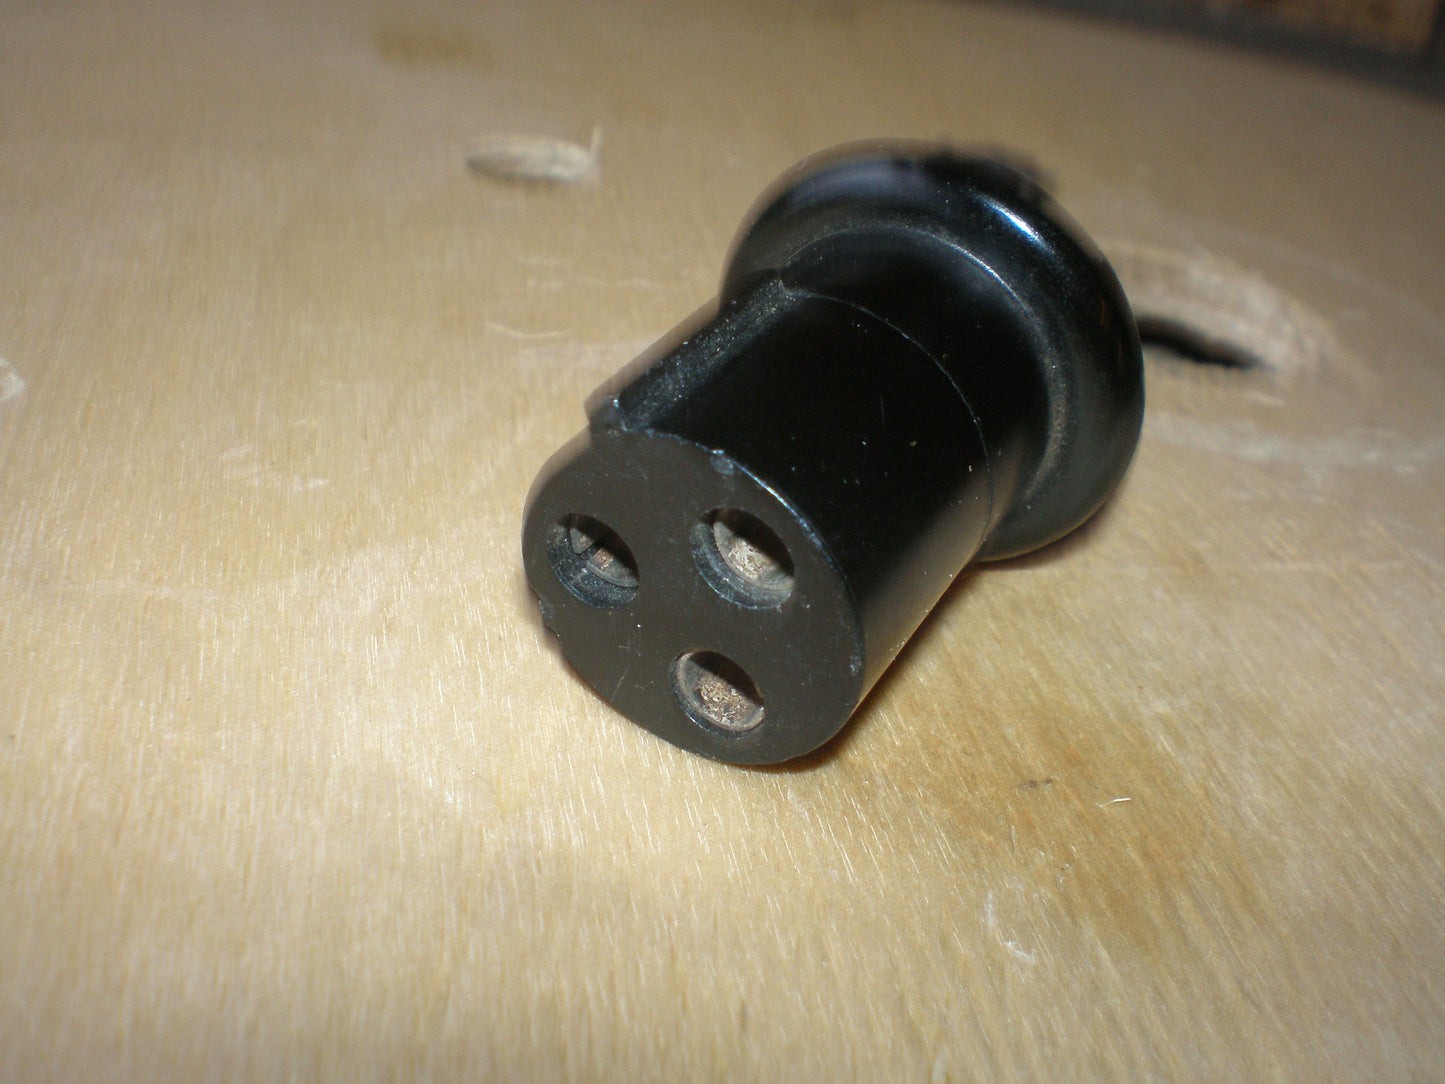 Old UK round power plug (line socket)